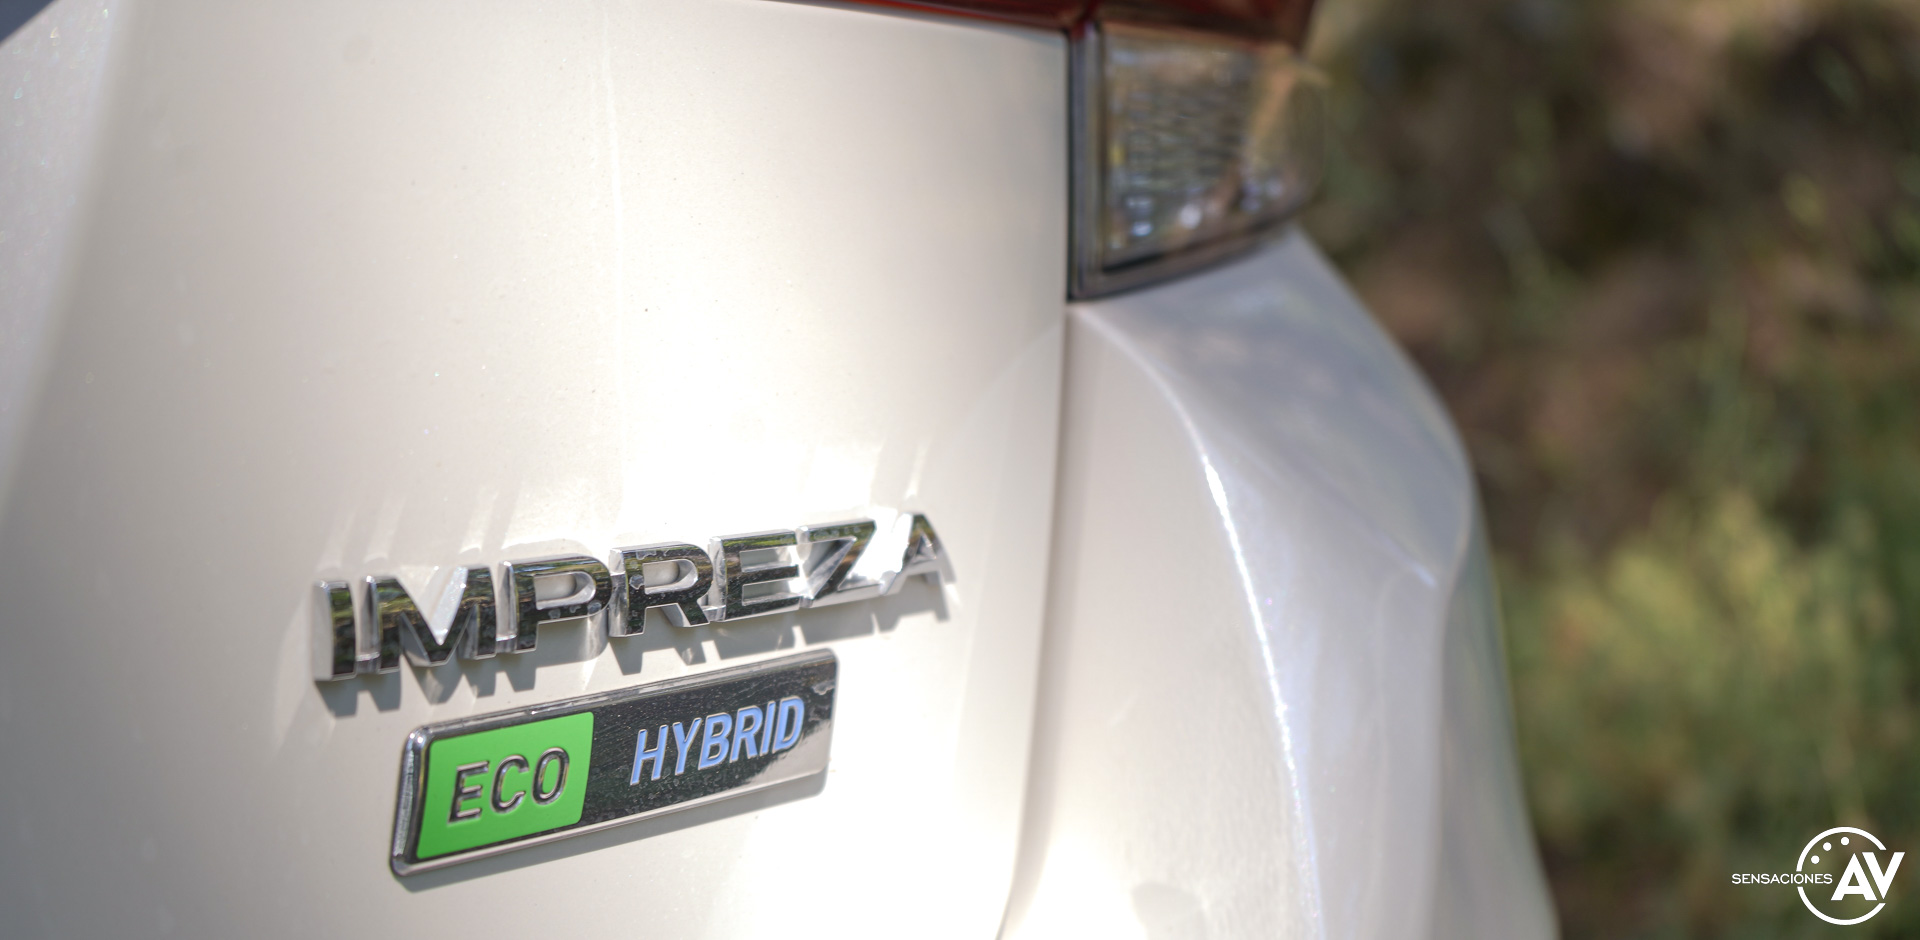 Logo Eco Subaru Impreza - Prueba Subaru Impreza ecoHybrid 2021: Una leyenda electrificada